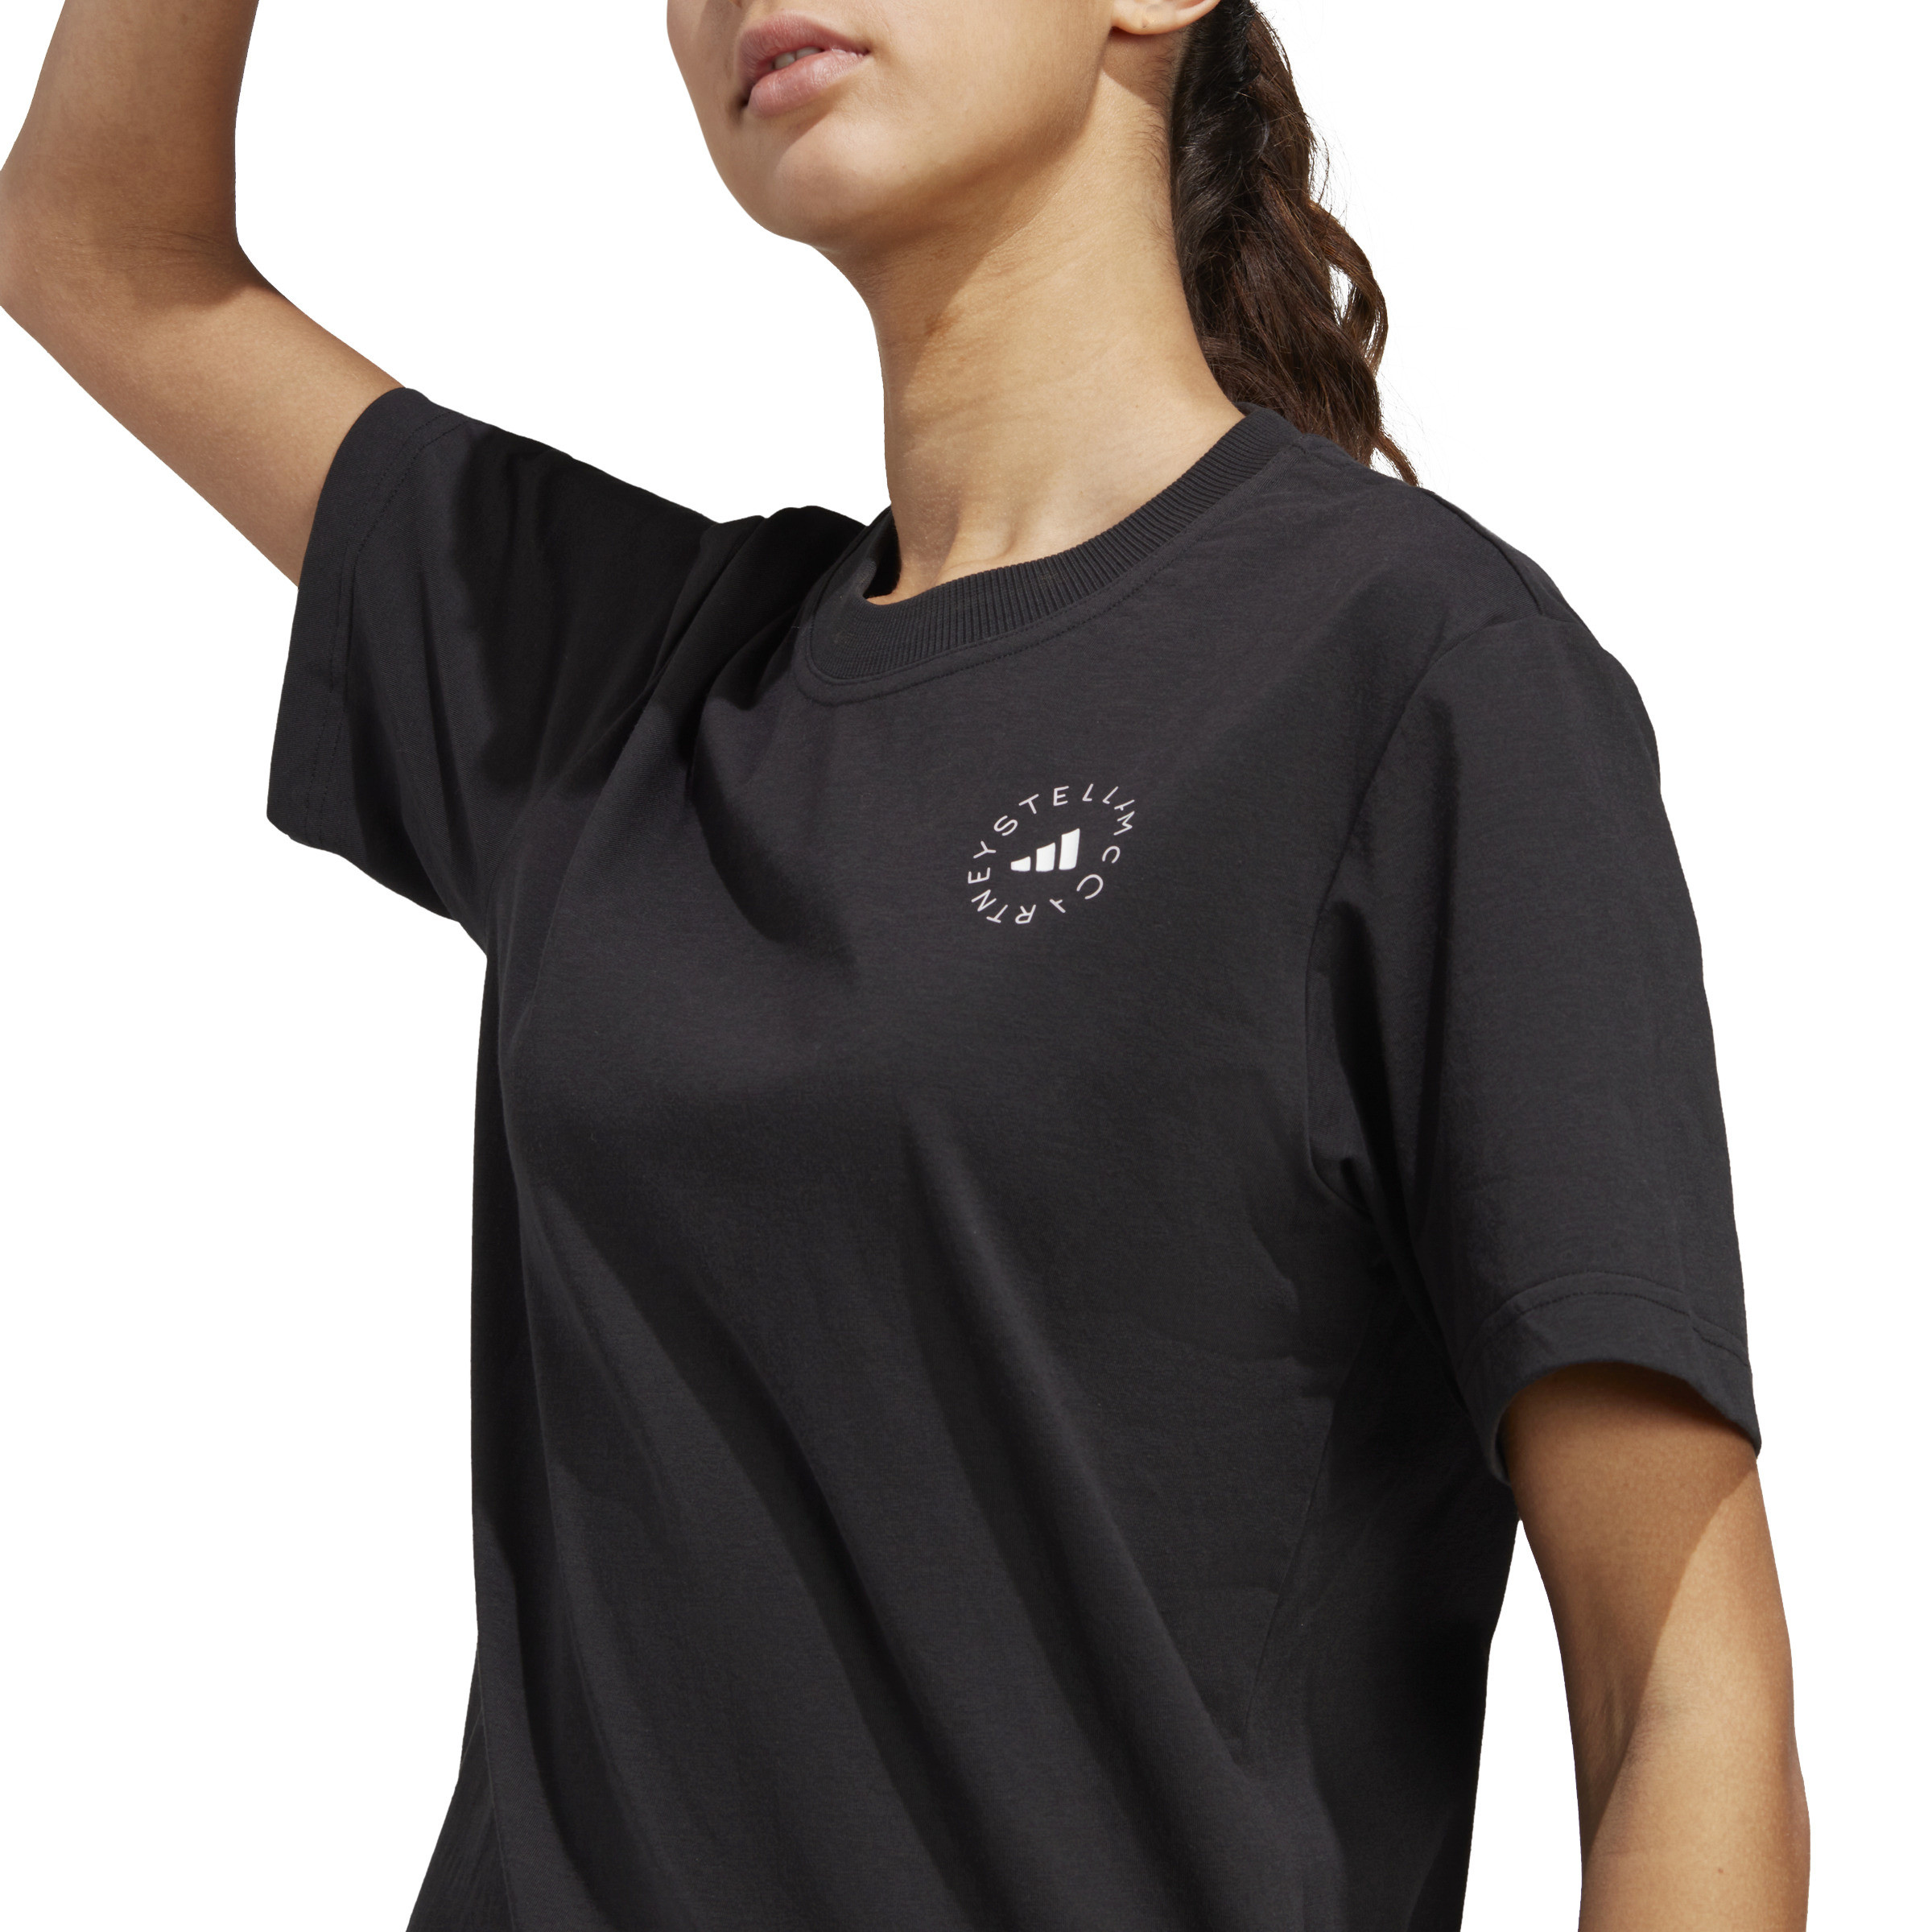 Adidas by Stella McCartney - TrueCasuals Regular Sportswear T-Shirt, Black, large image number 3